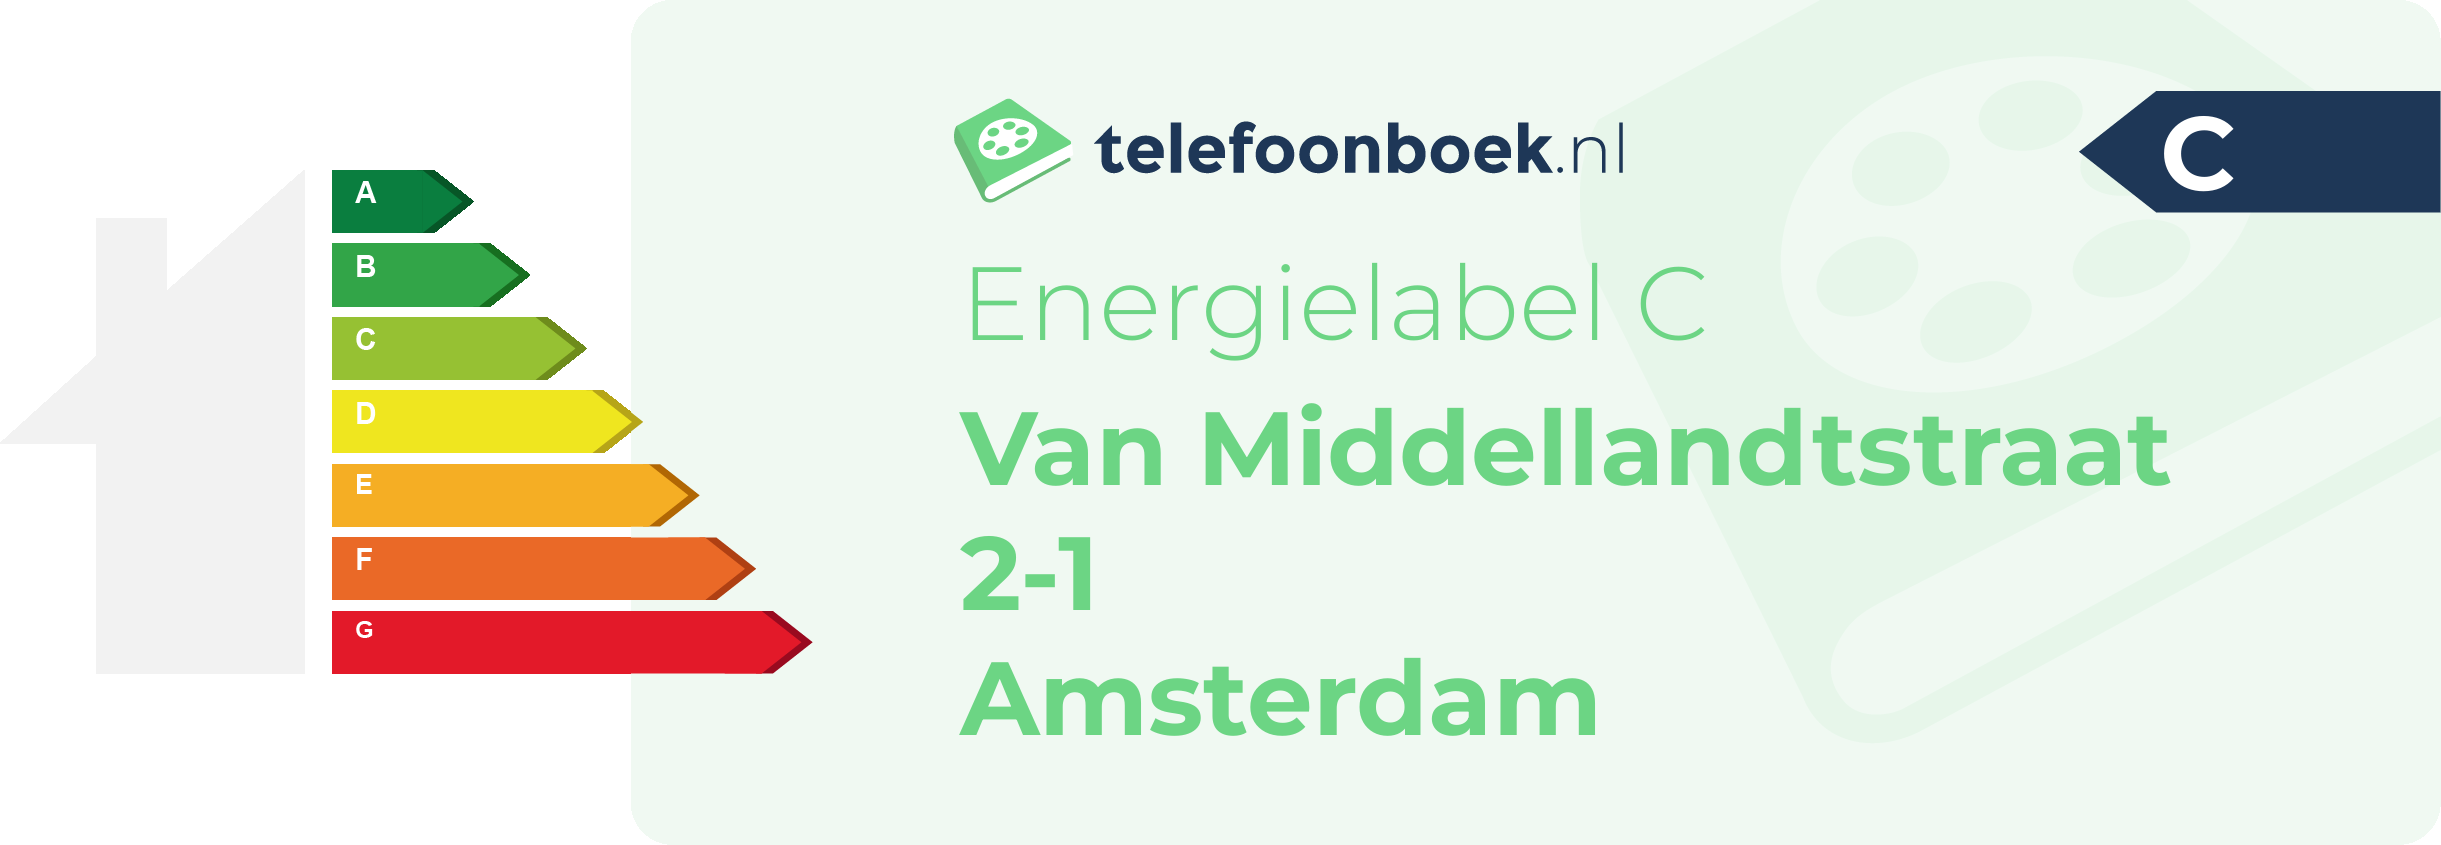 Energielabel Van Middellandtstraat 2-1 Amsterdam